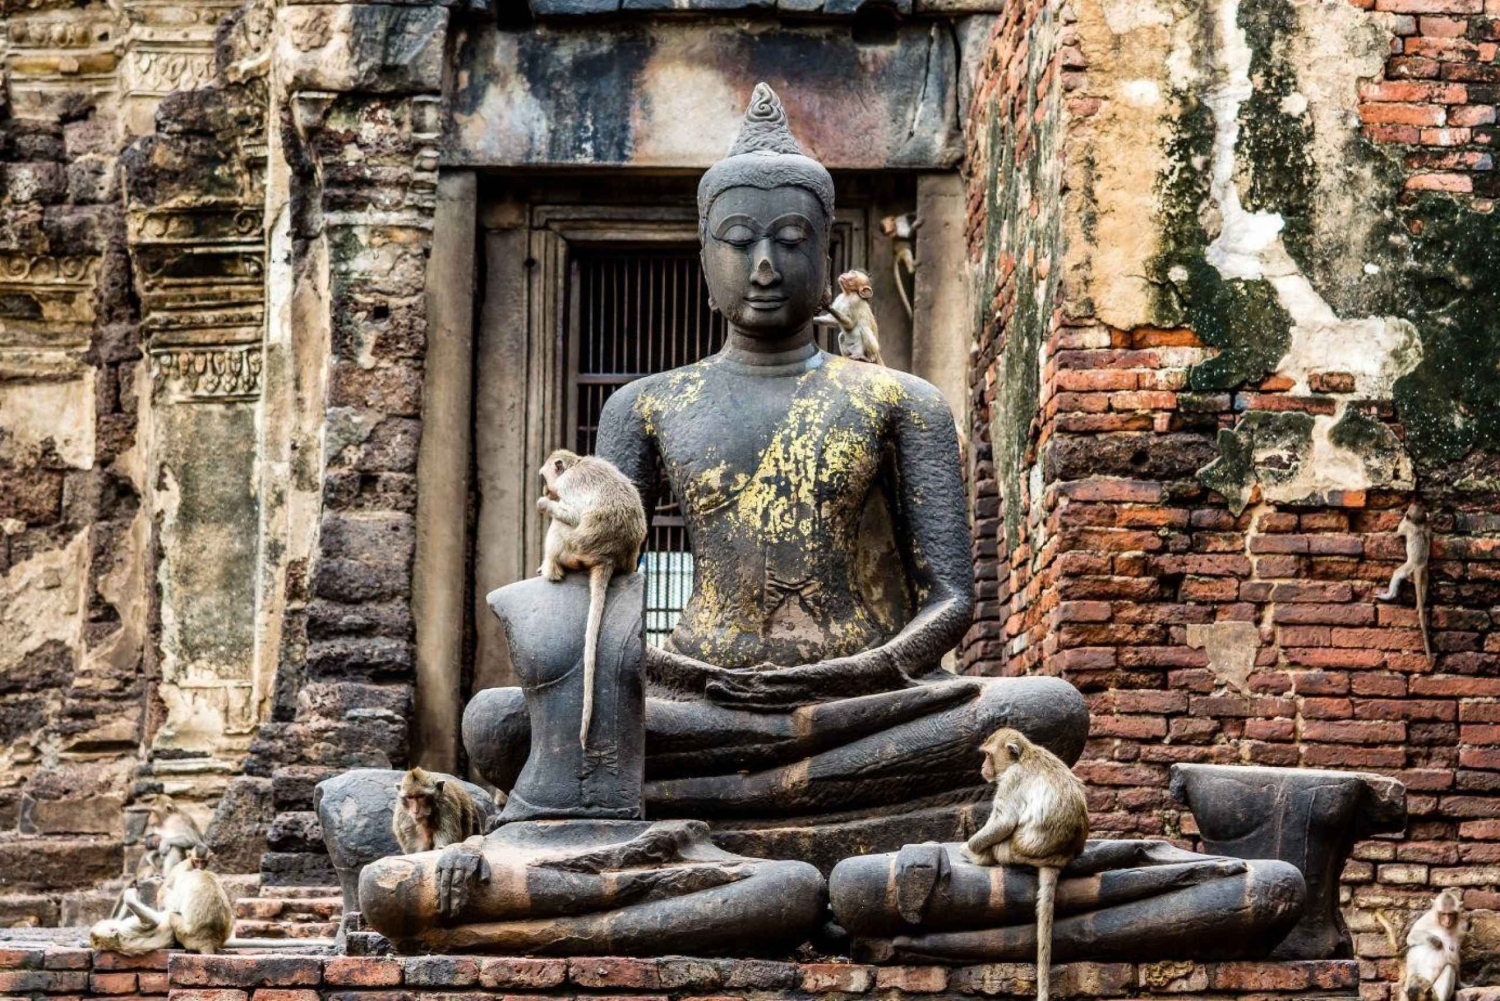 Lopburi Affentempel & Ayutthaya Altstadt (UNESCO) Tour